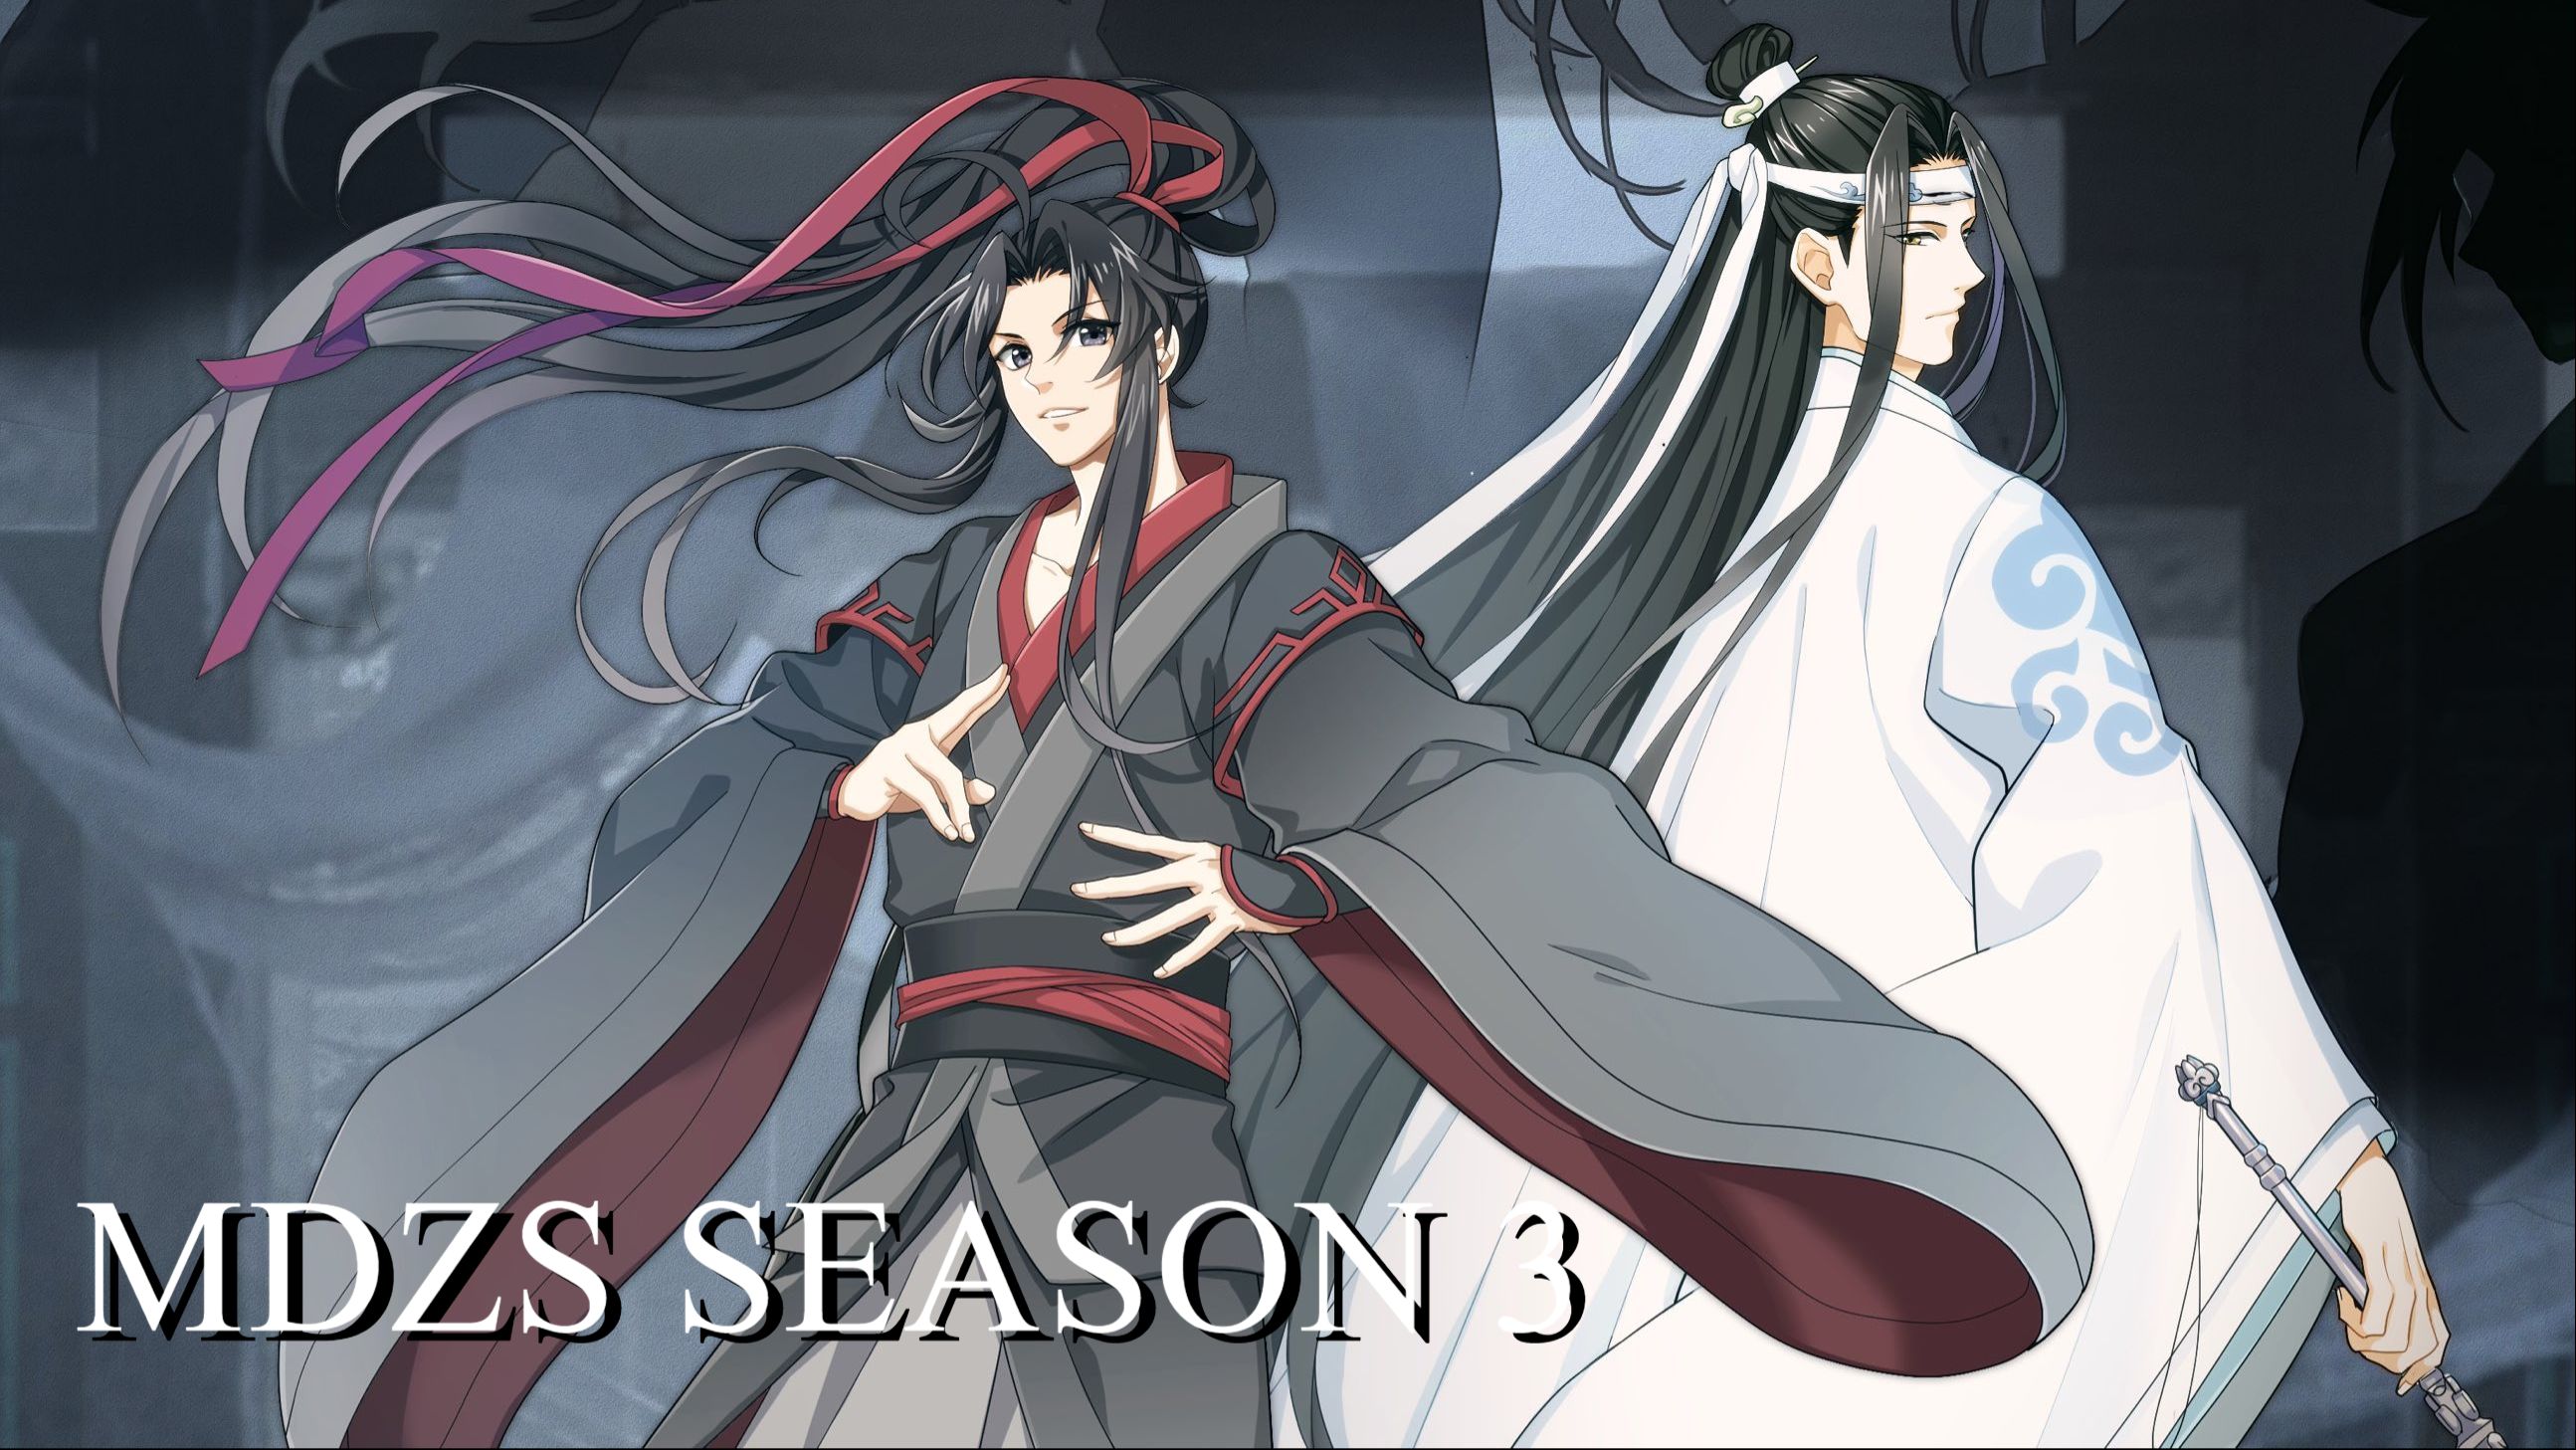 The Mo Dao Zu Shi Season 3 New Characters We Should Look Forward To See